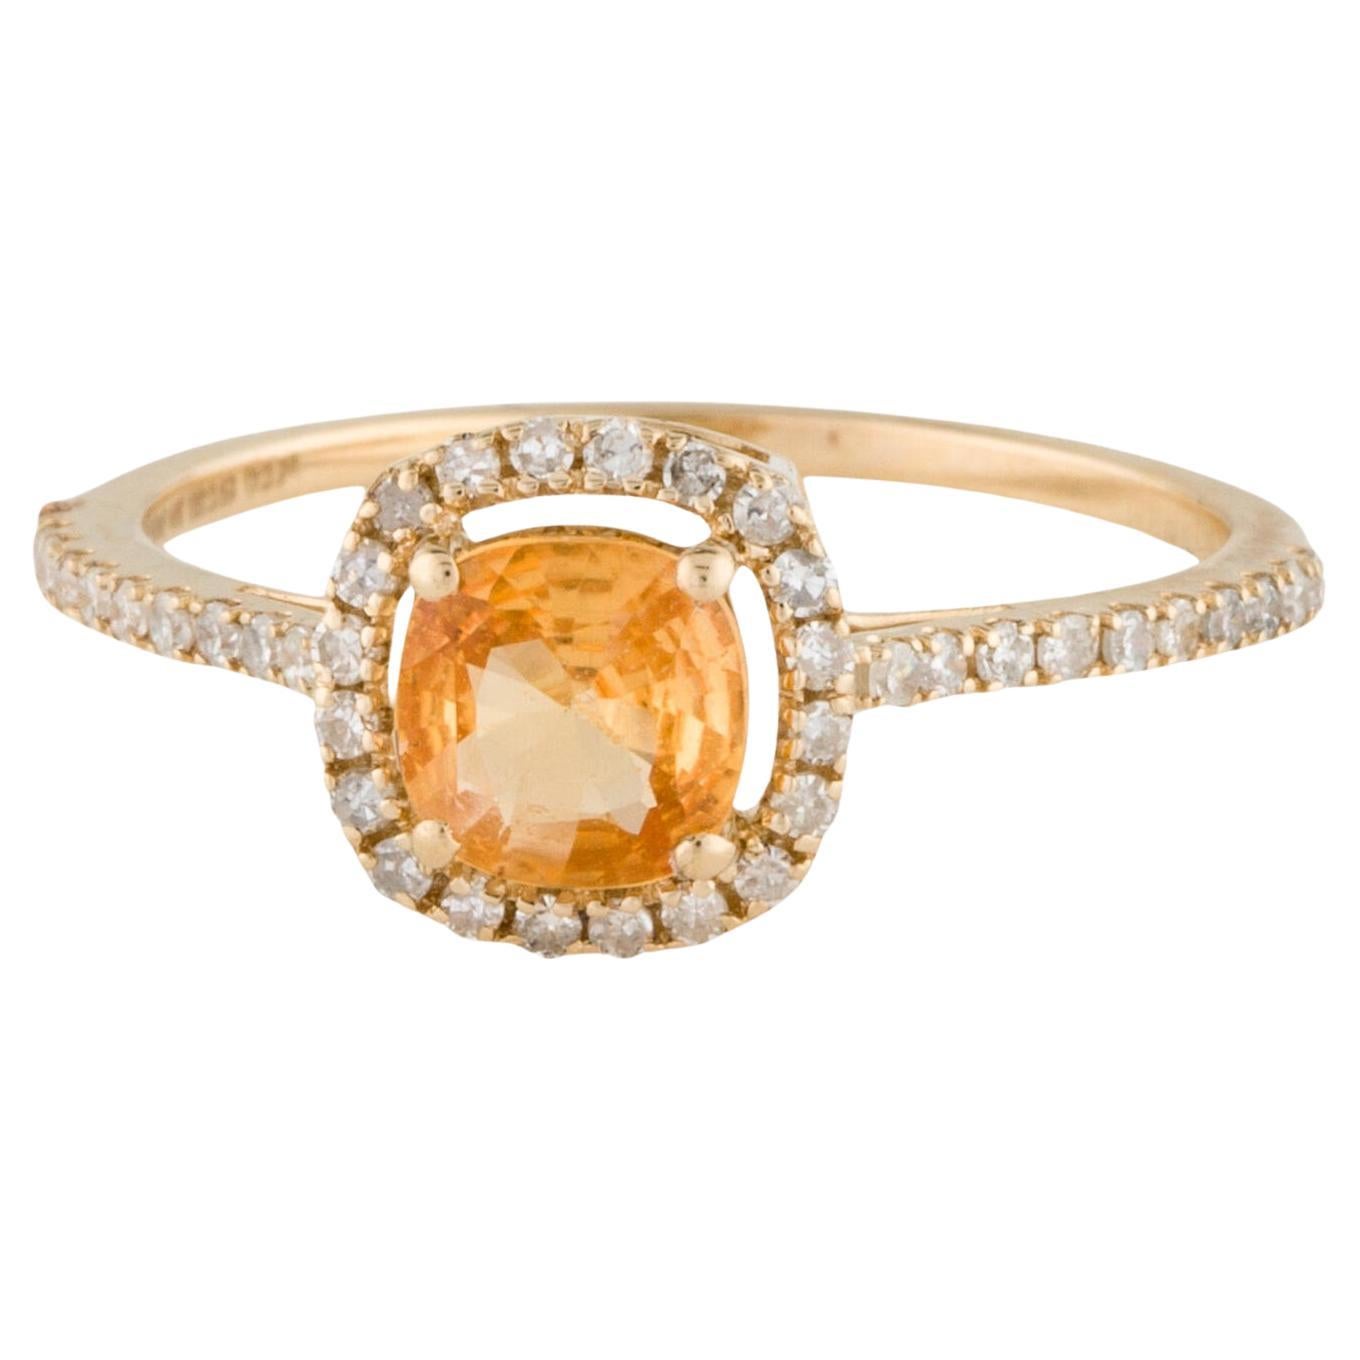 Stunning 14K Sapphire & Diamond Cocktail Ring - Size 6.75 - Statement Jewelry